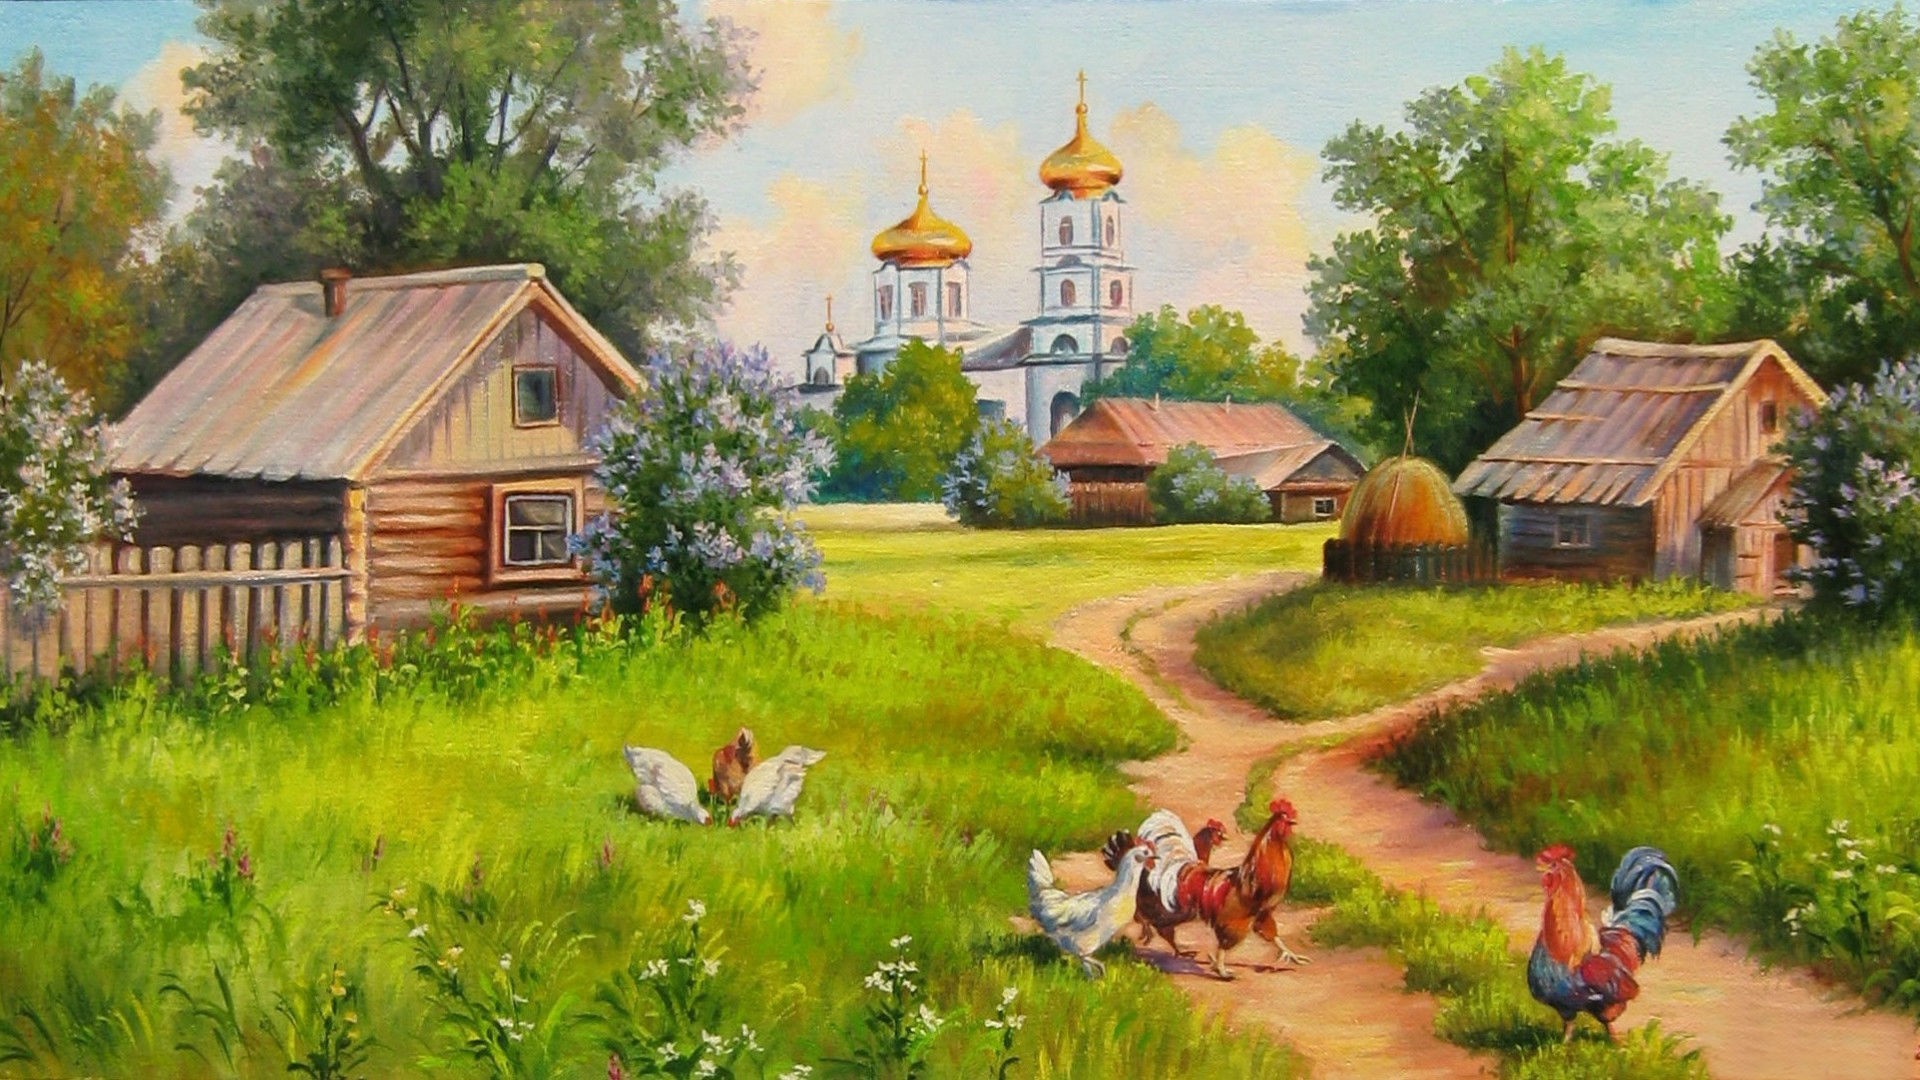 village painting wallpaper,natural landscape,painting,watercolor paint,rural area,meadow